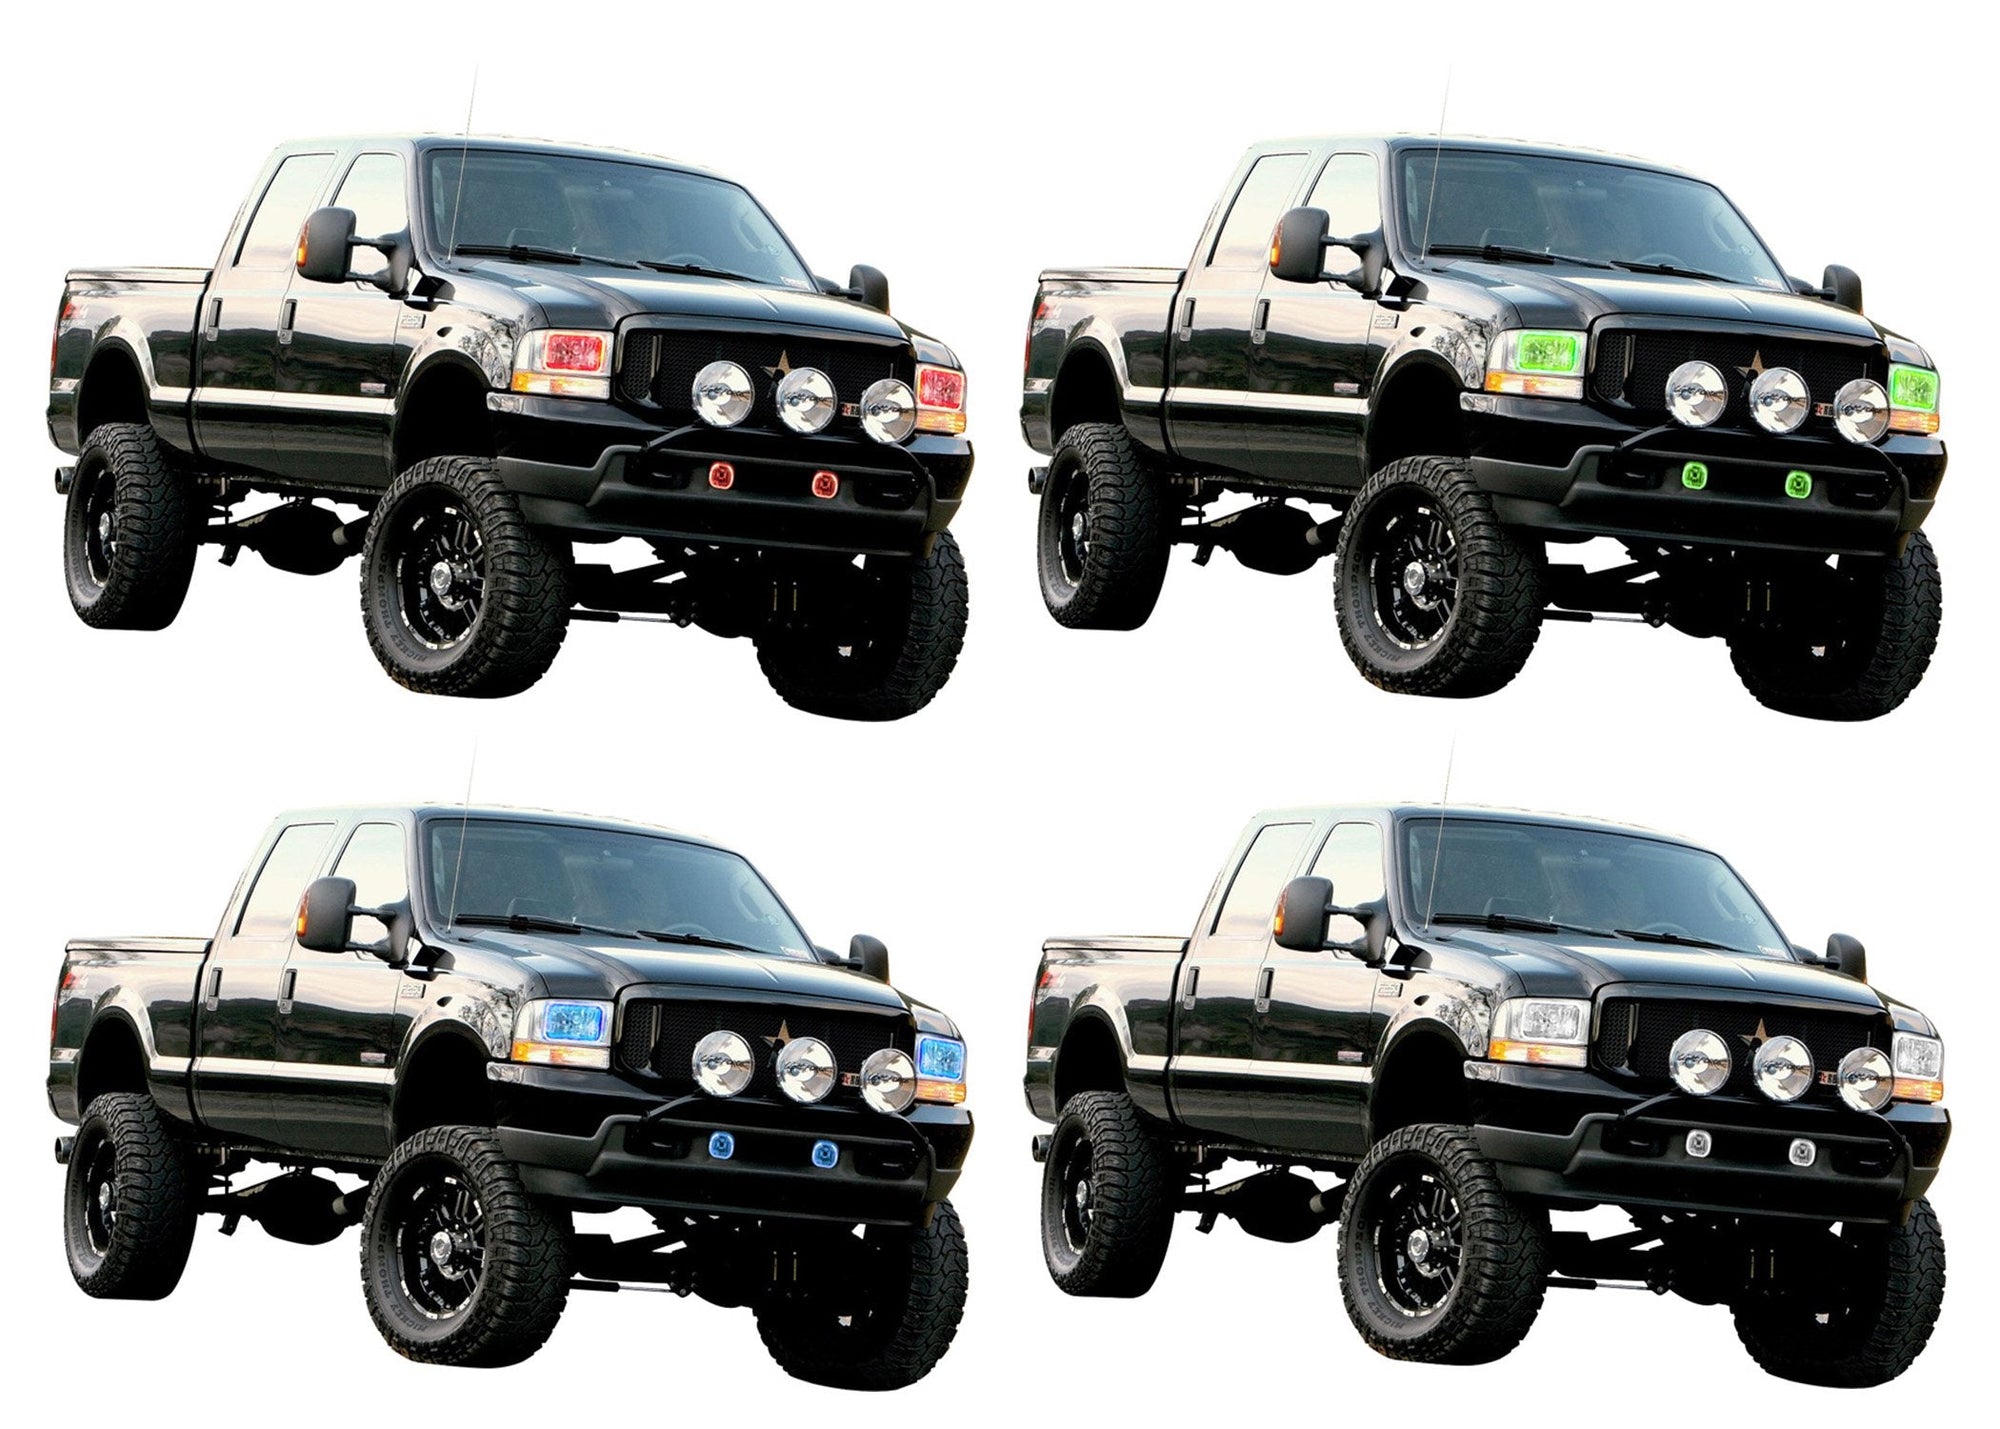 Ford-F-250 Super Duty-2001, 2002, 2003, 2004-LED-Halo-Headlights and Fog Lights-RGB-No Remote-FO-F20104-V3HF